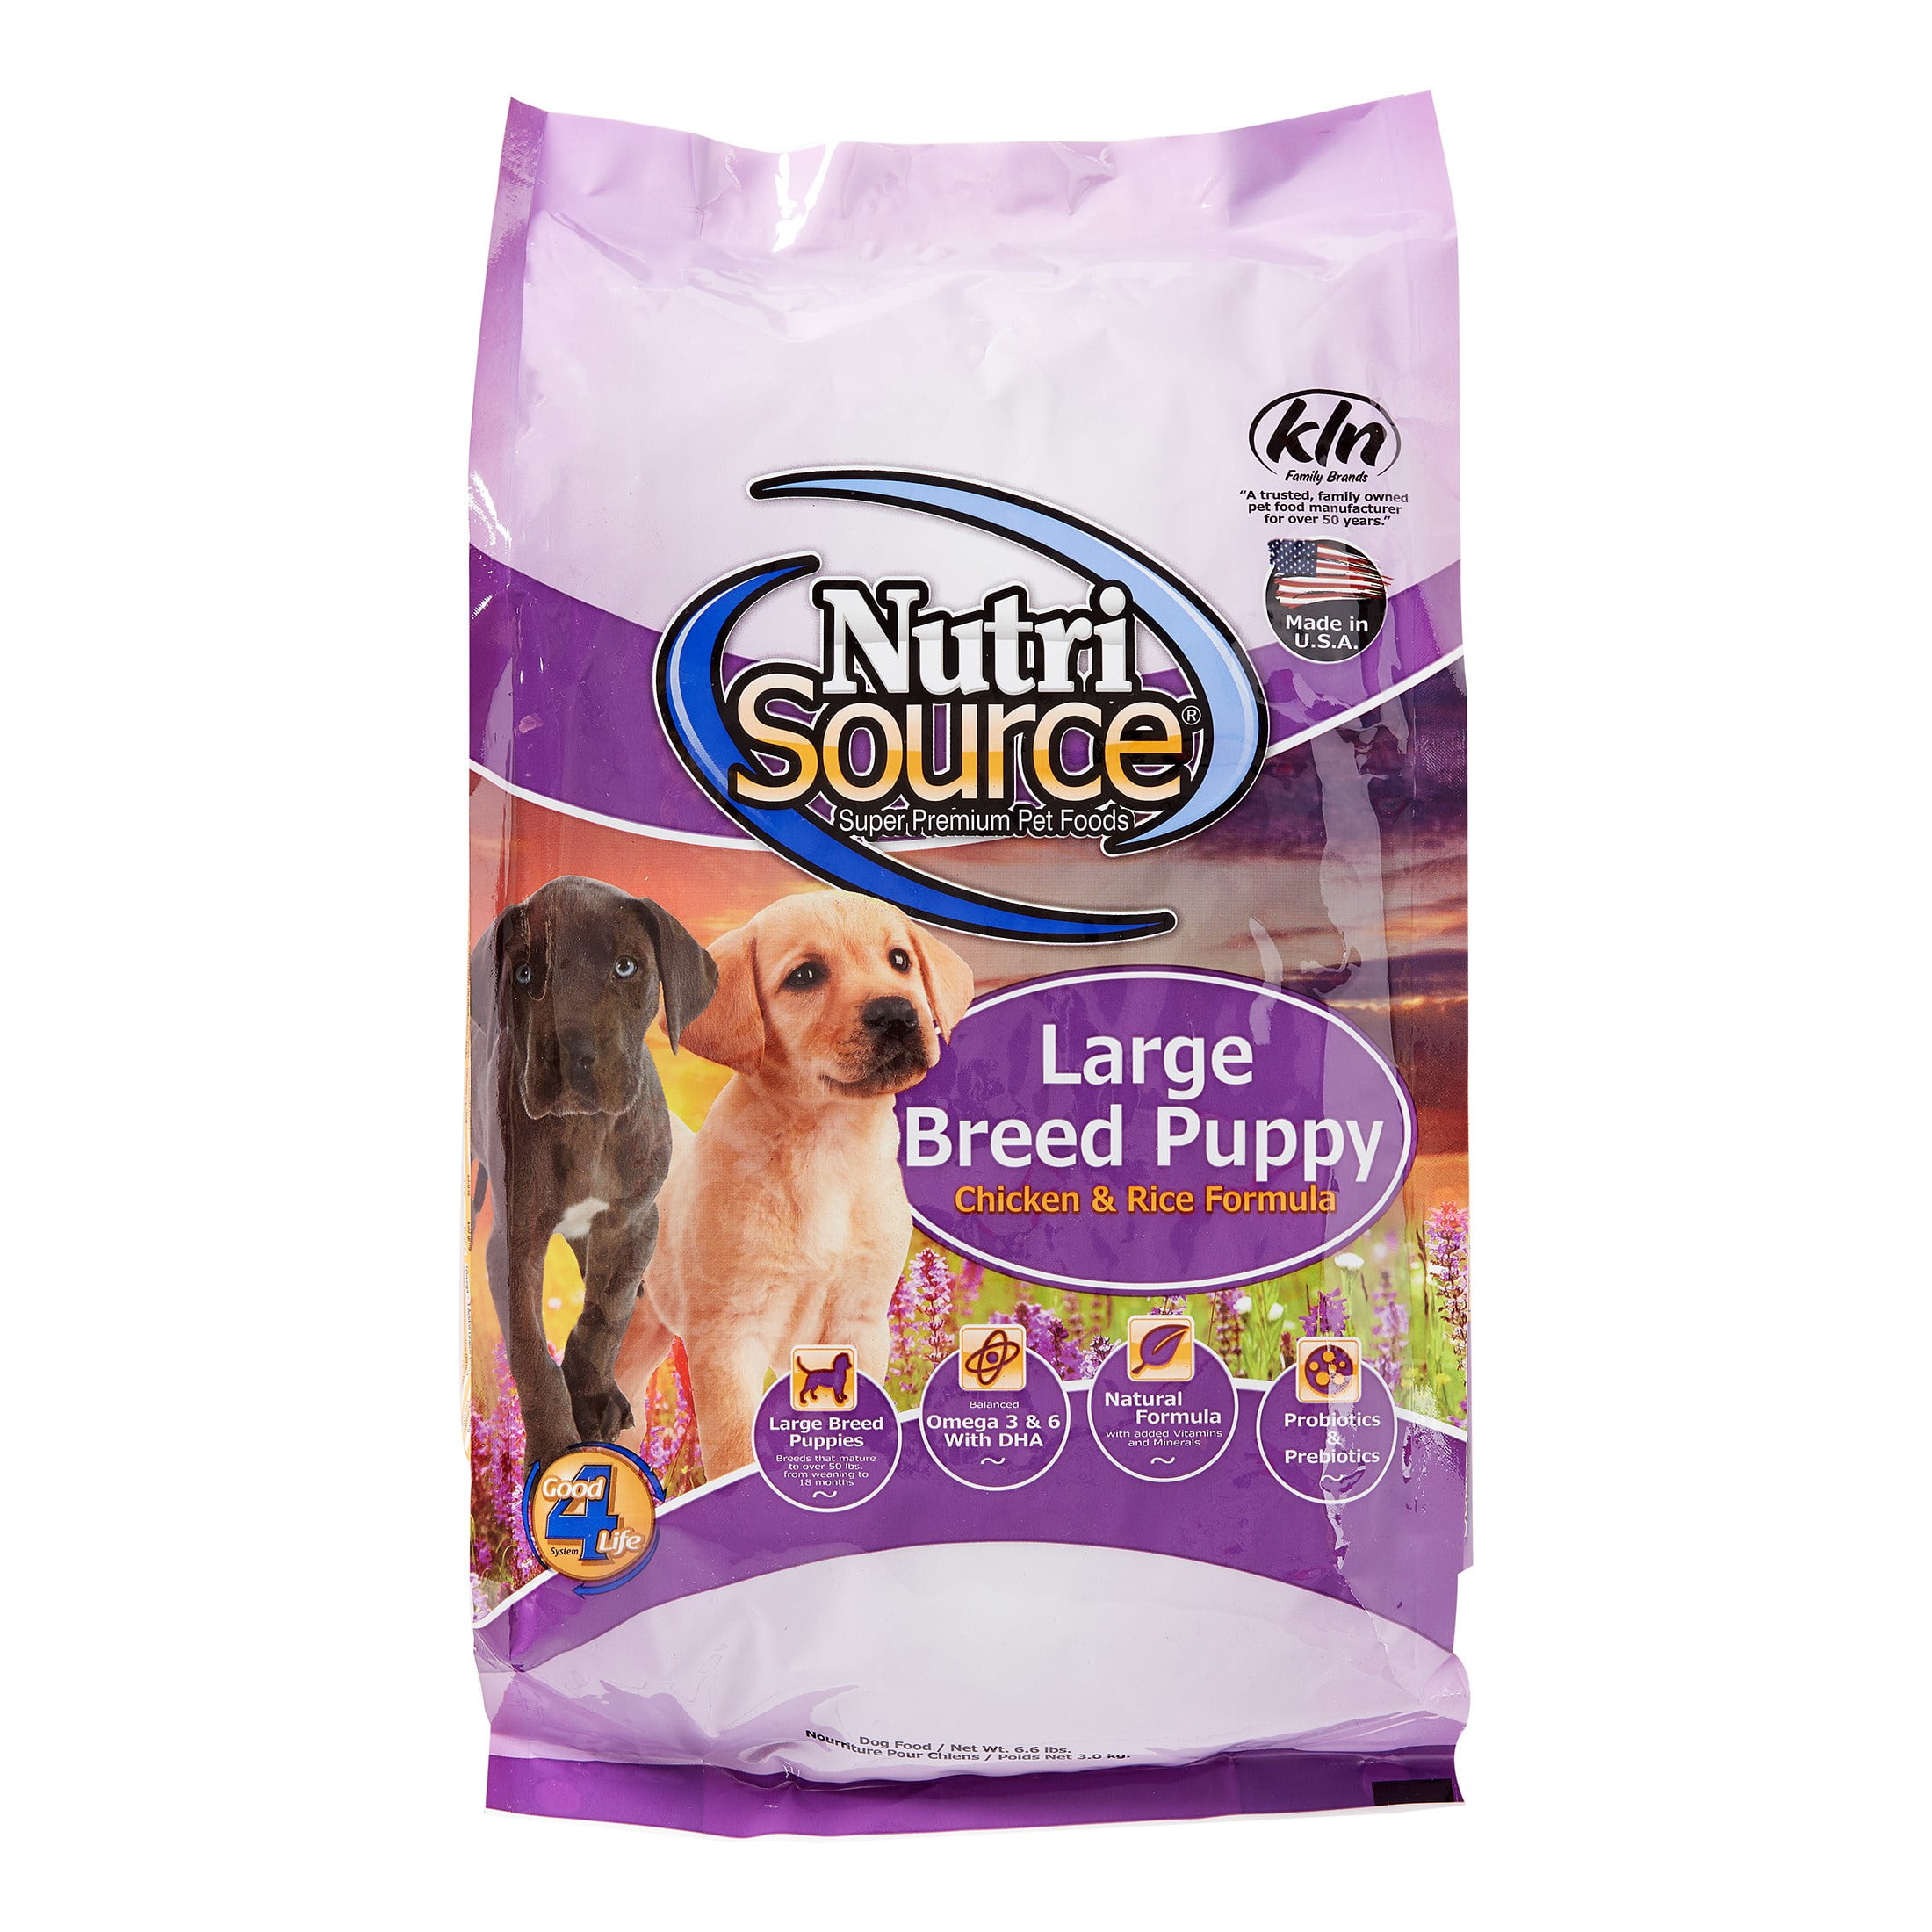 Nutrisource Puppy Food Walmart